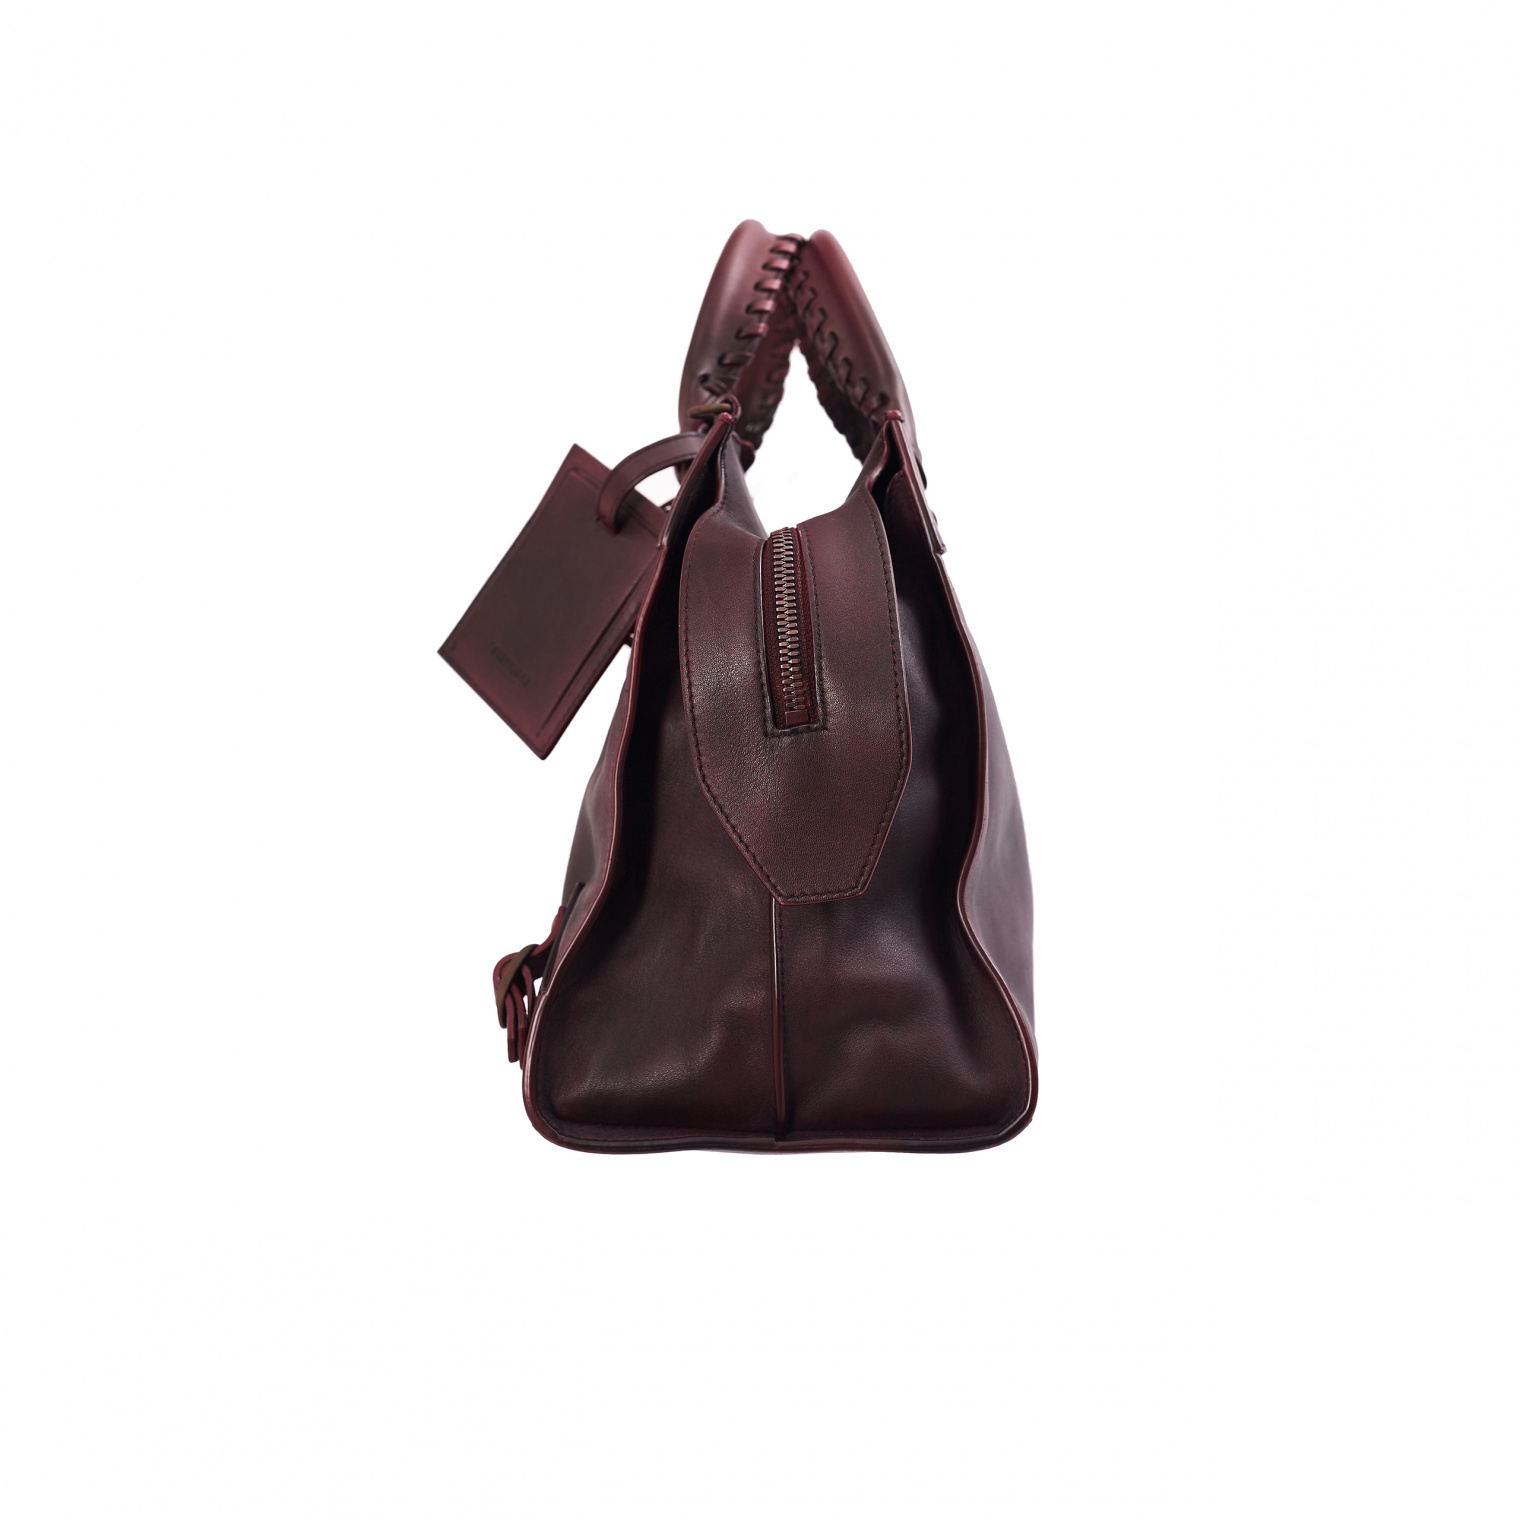 Balenciaga Neo Classic Medium Top Handle Bag in Burgundy